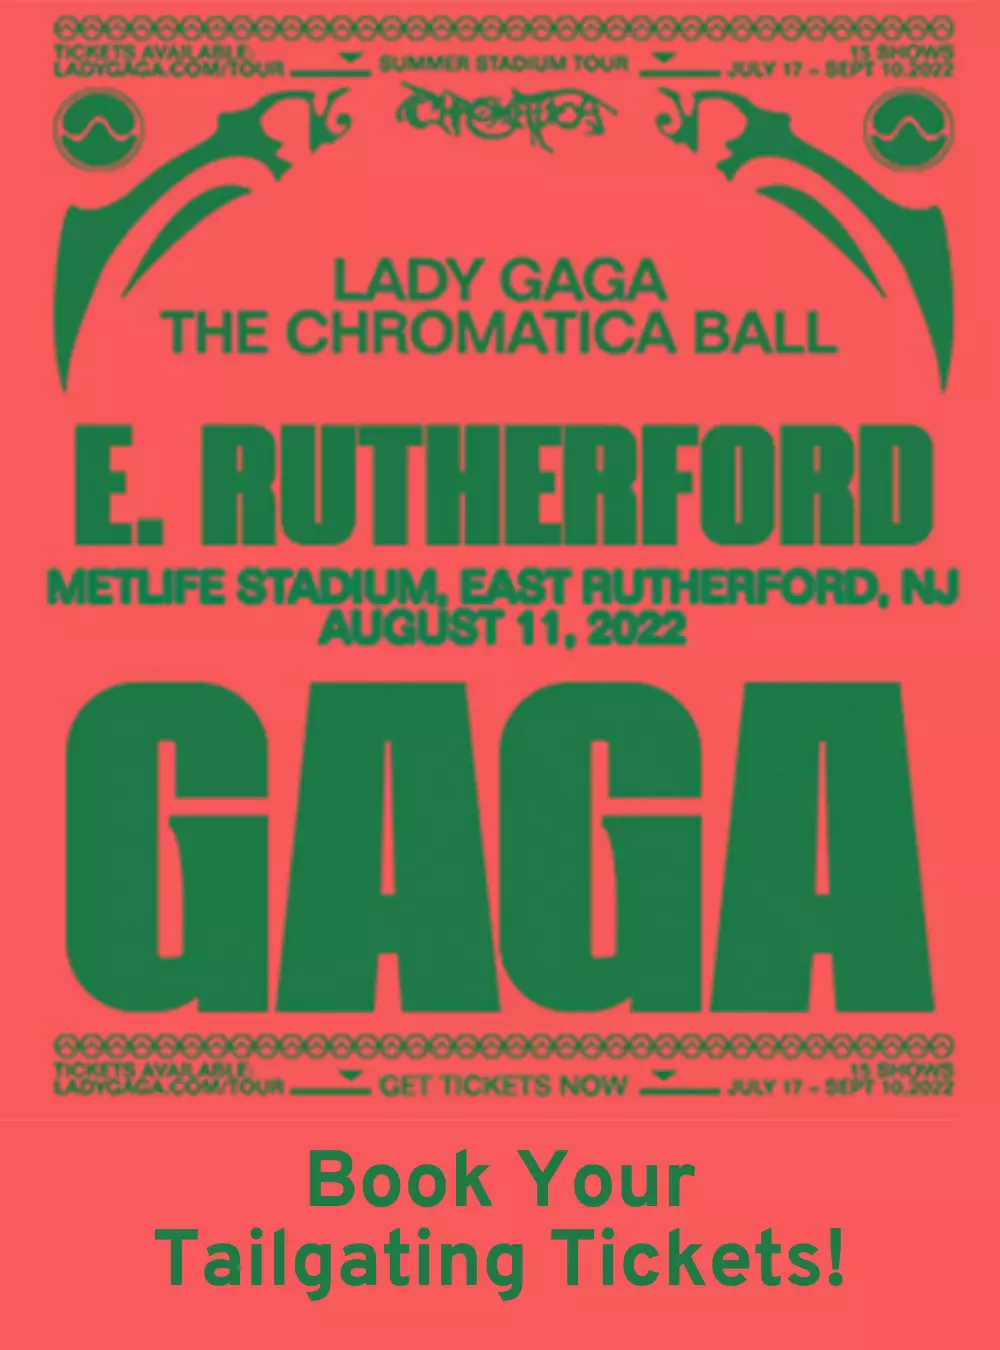 Lady Gaga Chromatica Ball MetLife Stadium Tailgate